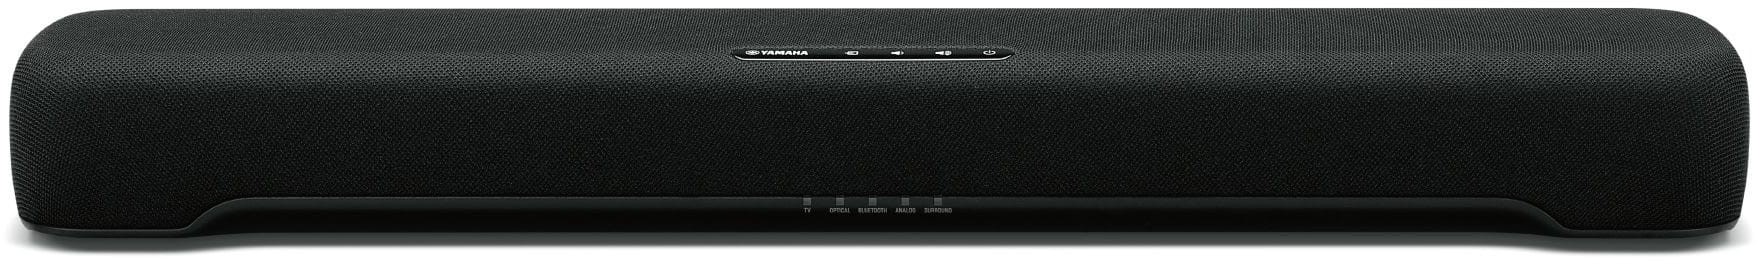 Yamaha SR-C20A